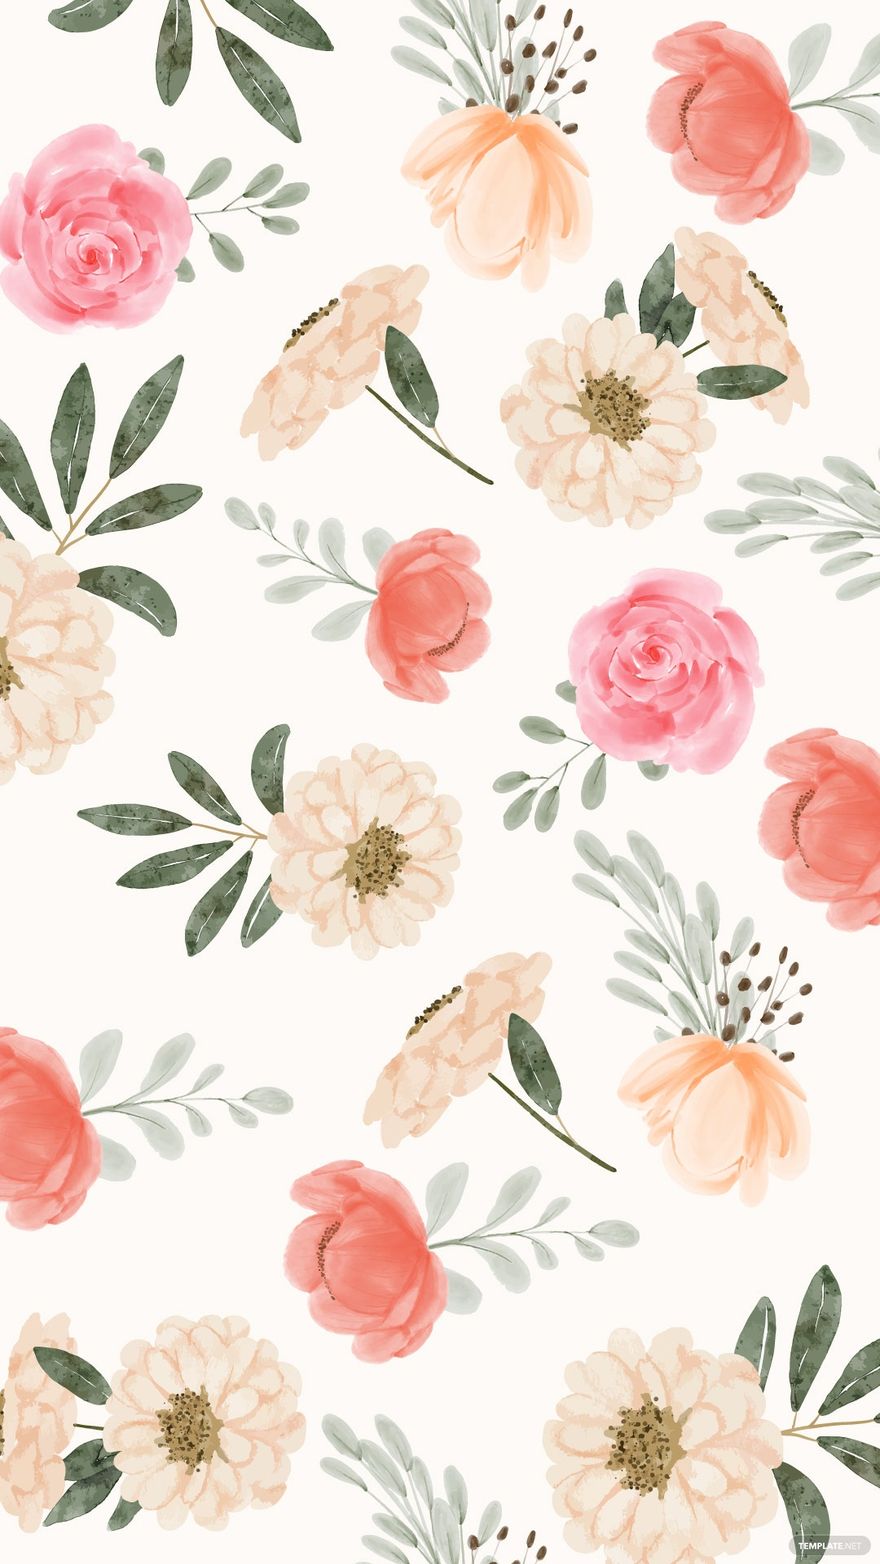 Floral Fabric White Background in Illustrator, EPS, SVG, JPG